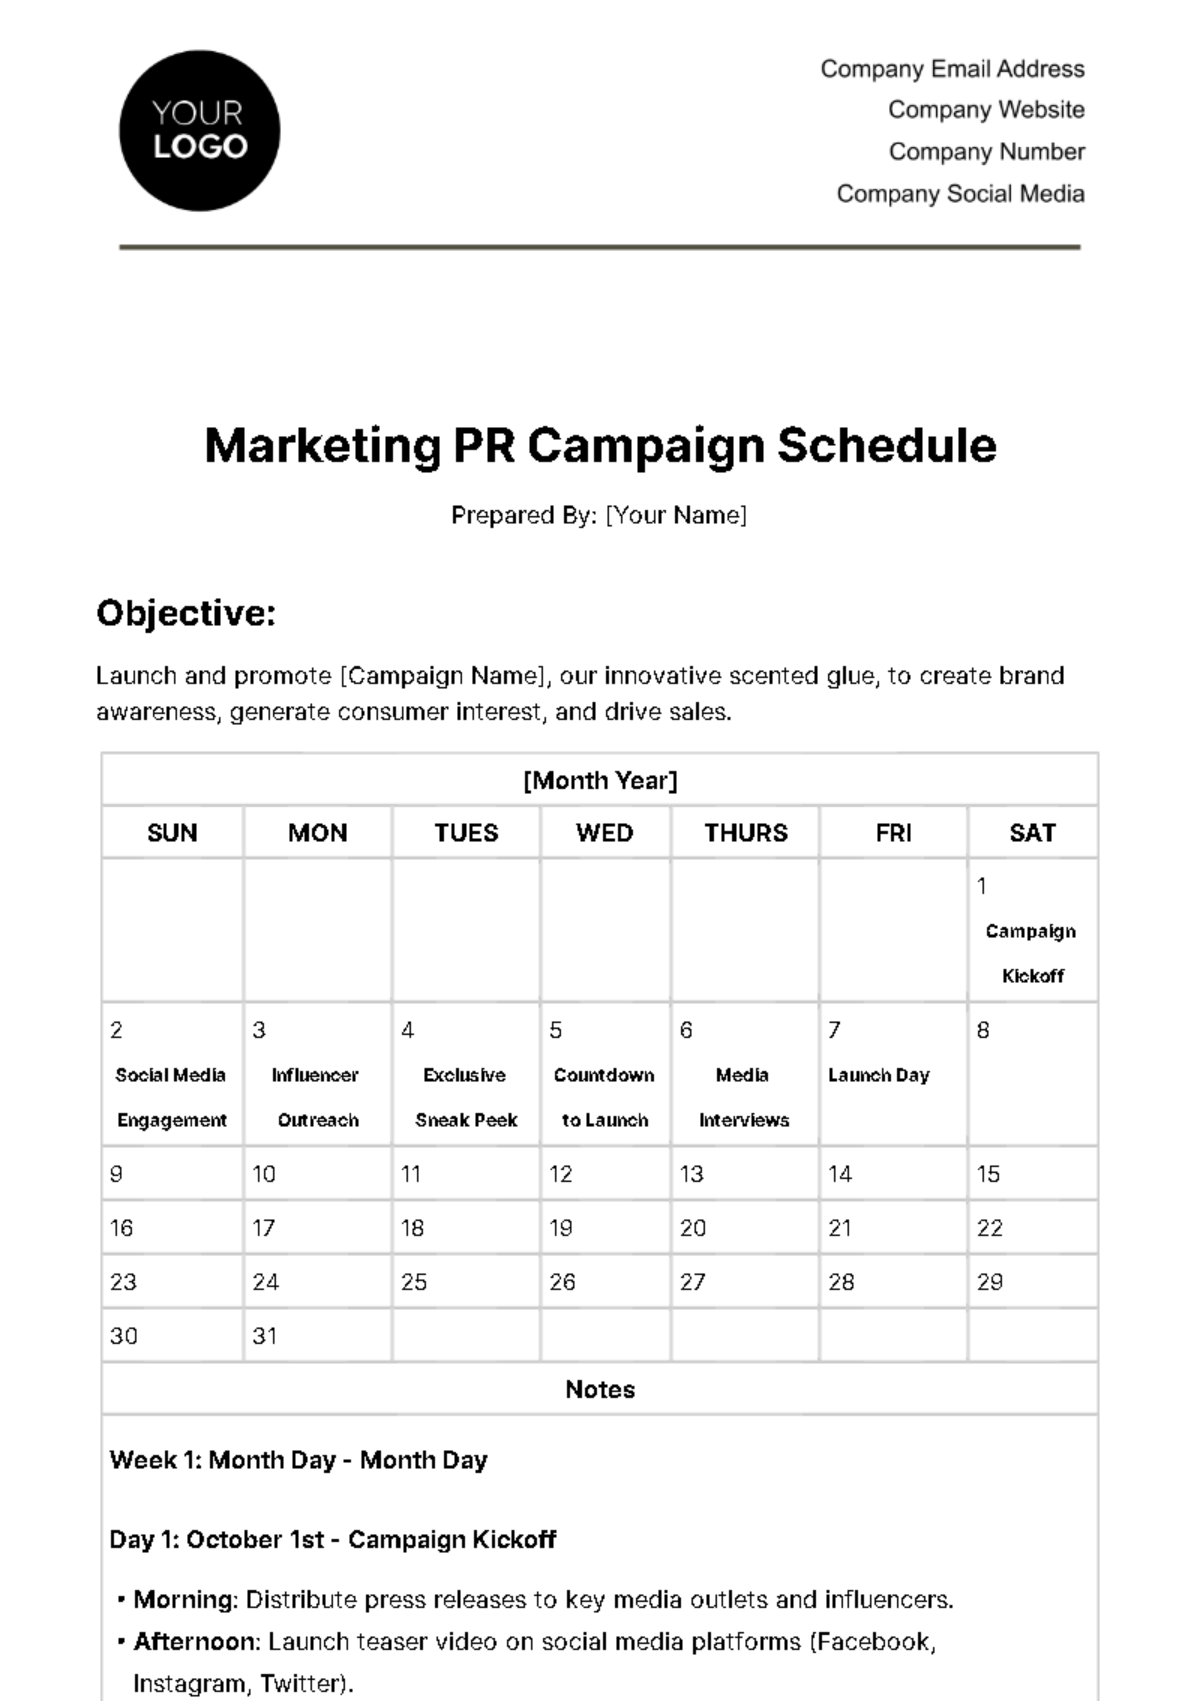 Free Marketing PR Campaign Schedule Template